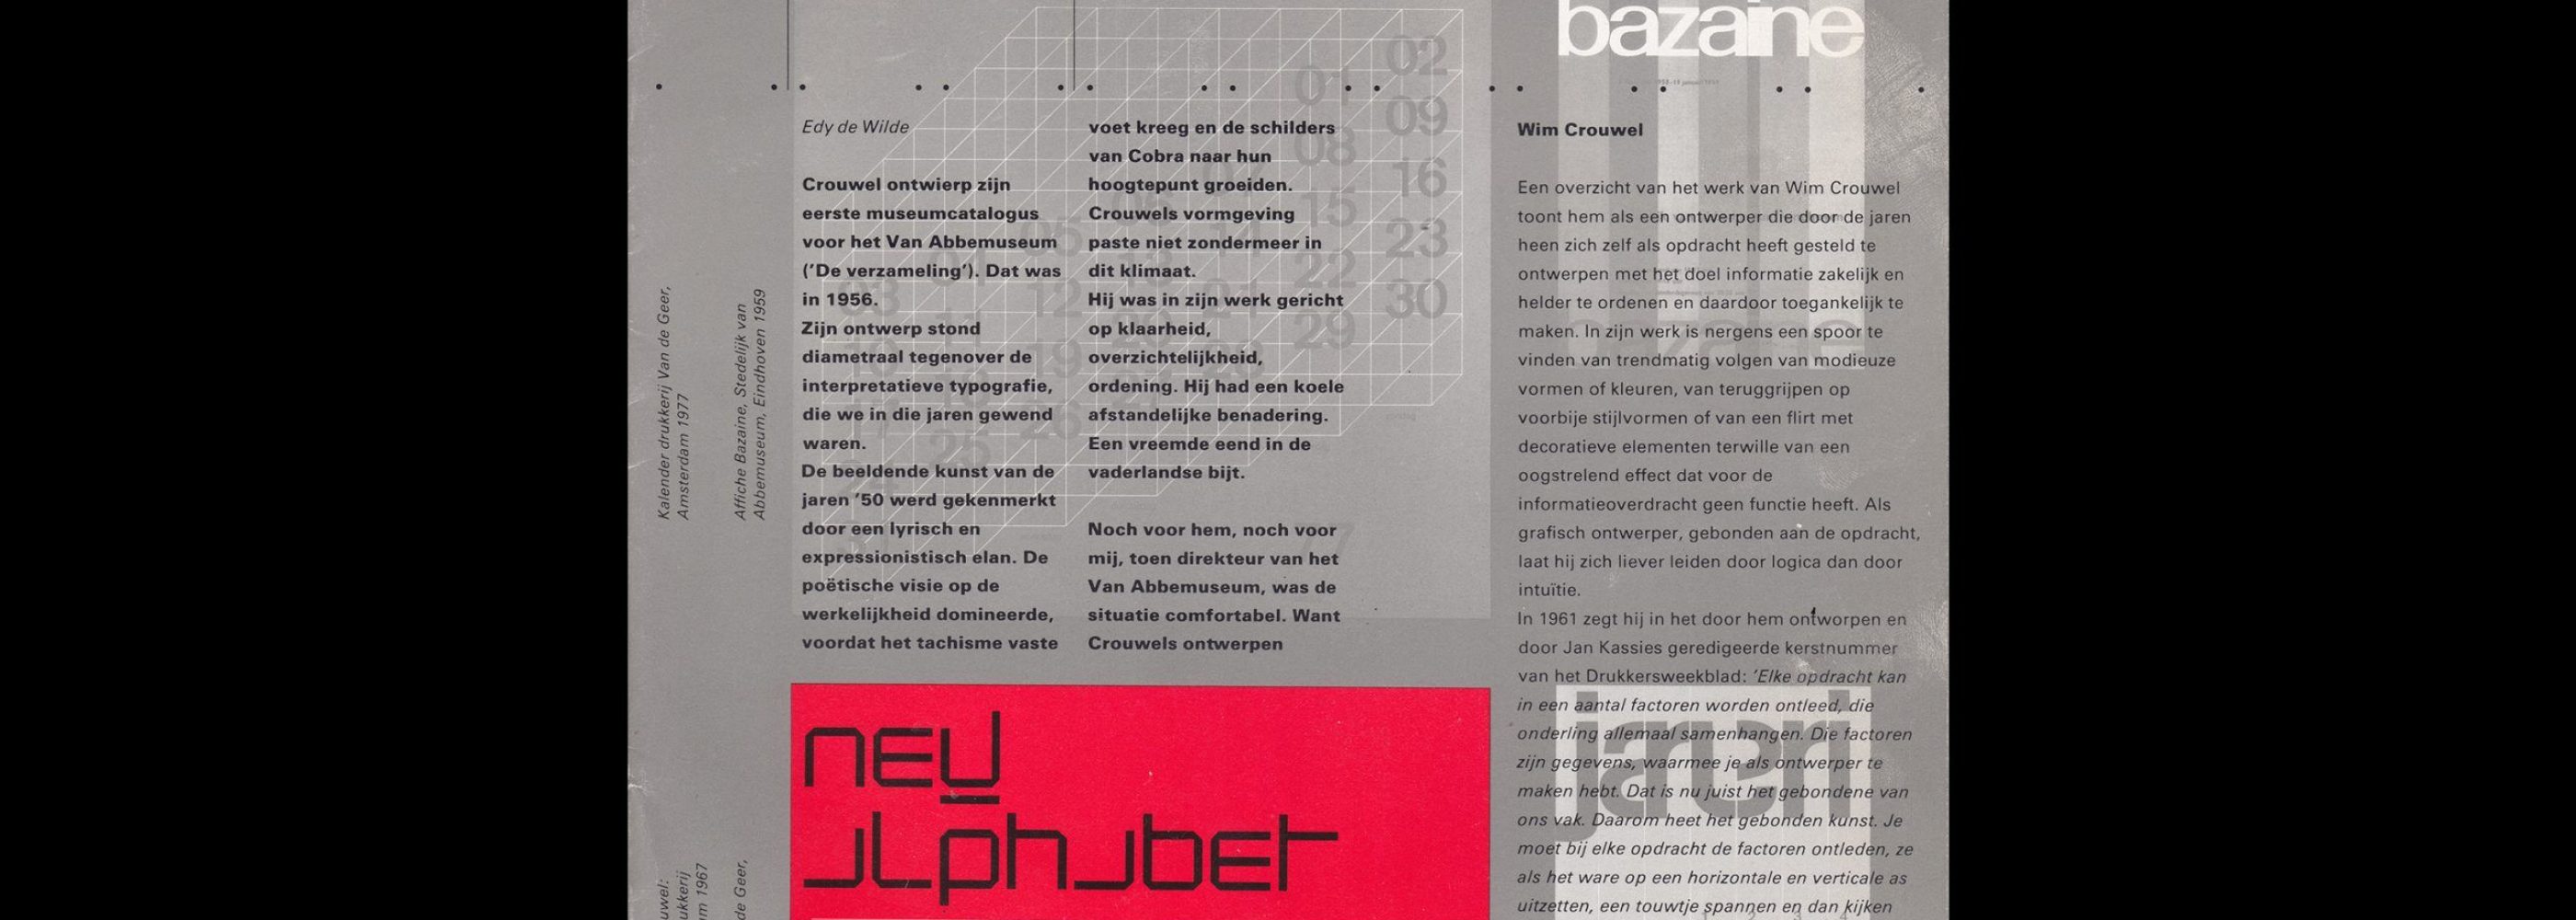 Extra Bulletin, Stedelijk Museum, Amsterdam, 1979, Wim Crouwel